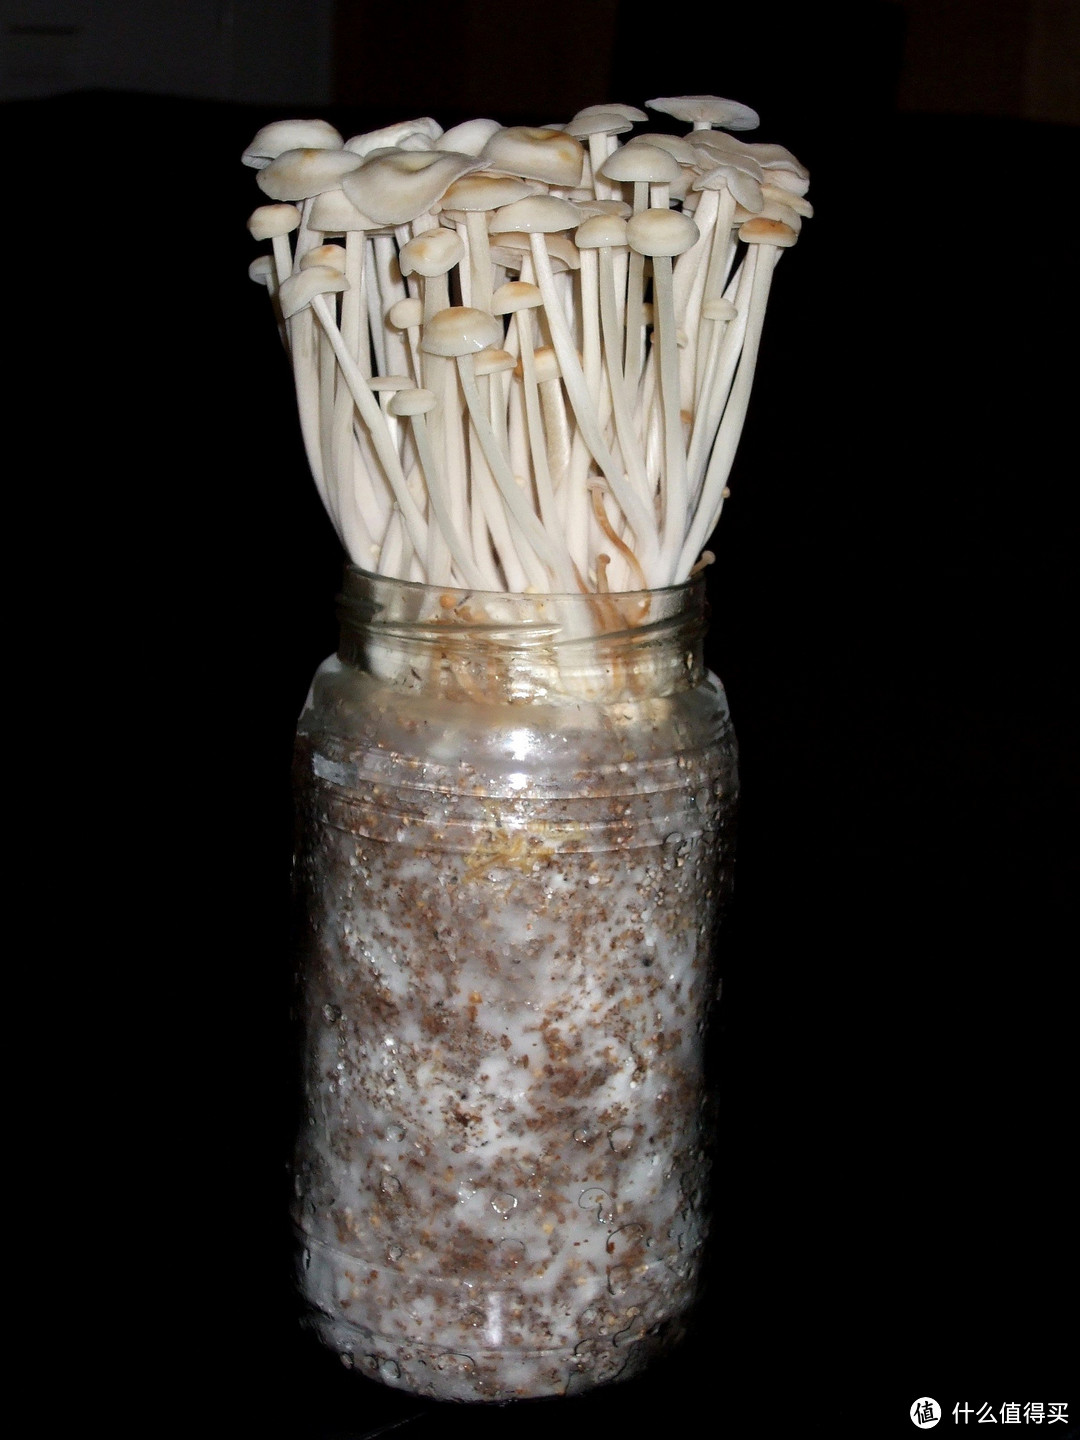 瓶栽的金针菇。图片：Wendell Smith / flickr